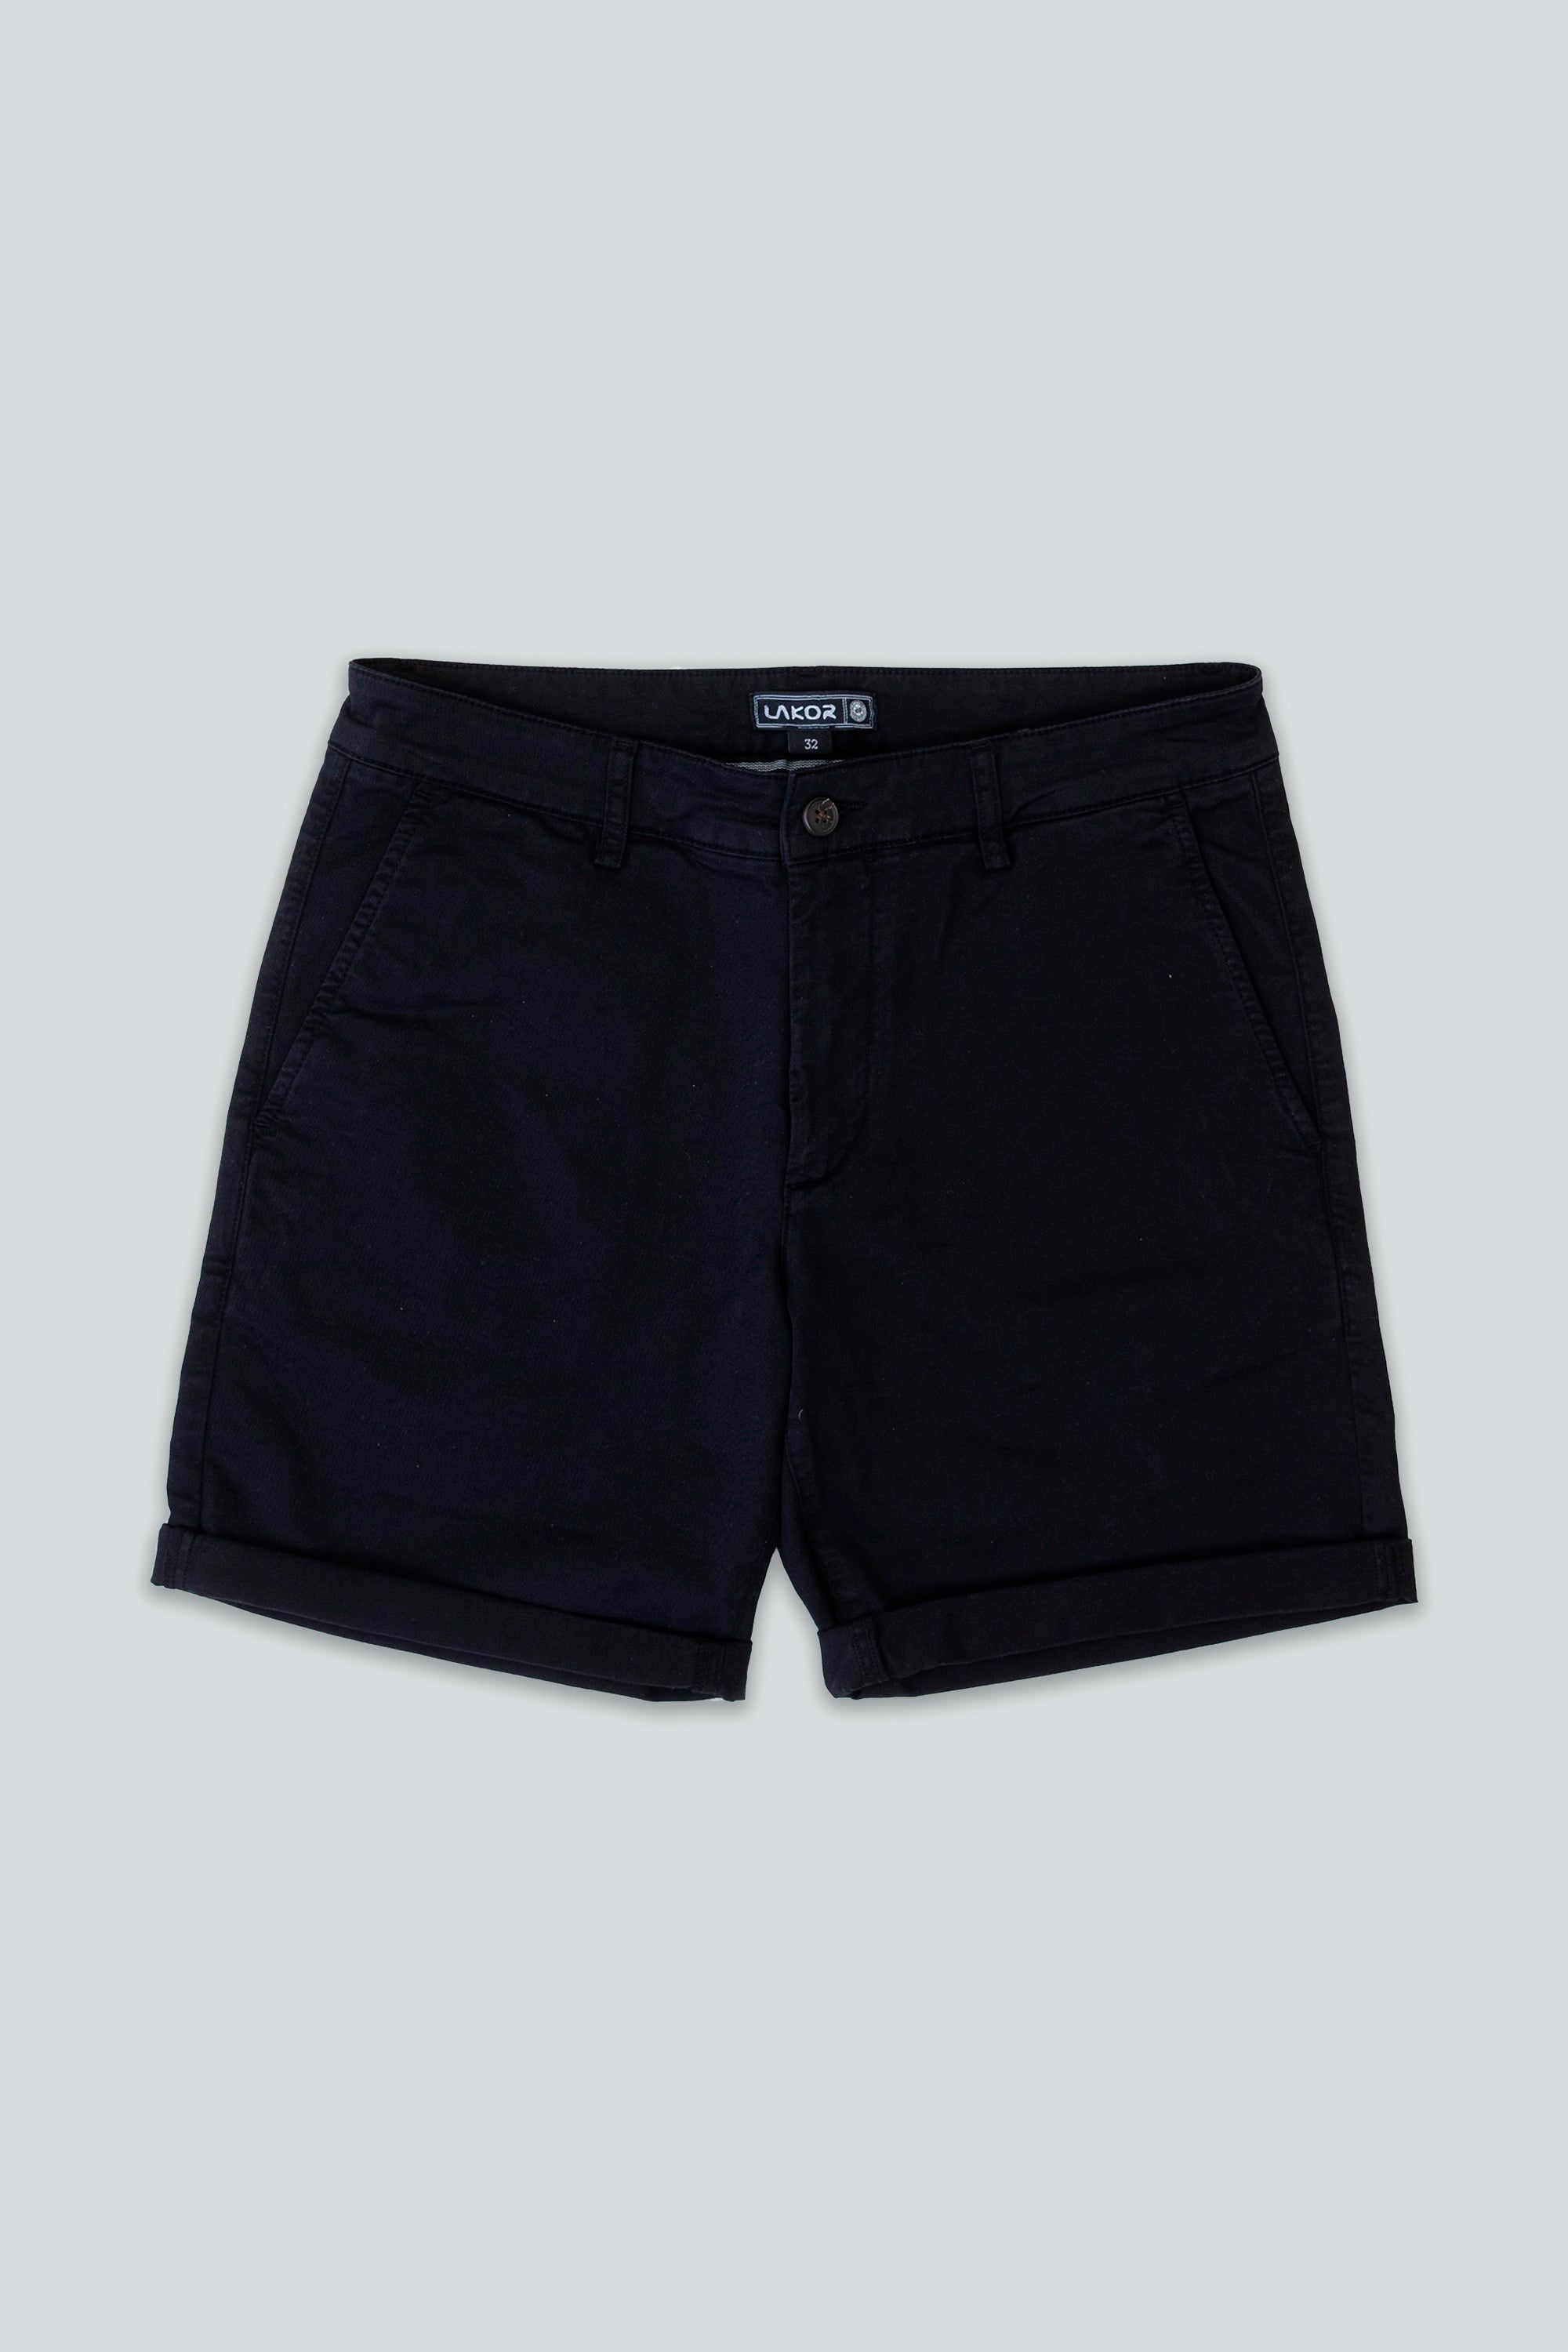 Chino Shorts (Black)